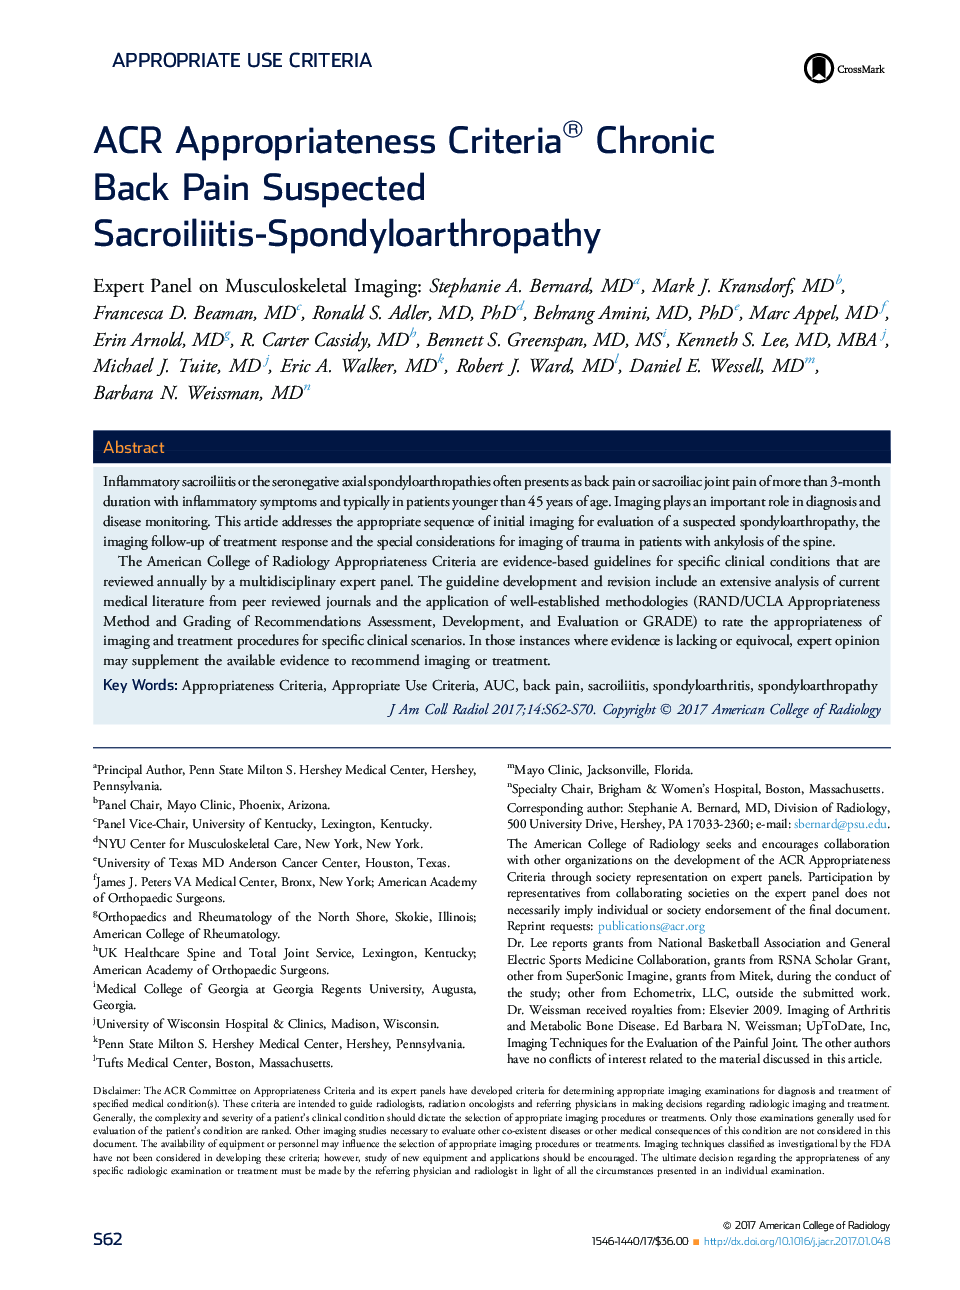 ACR Appropriateness Criteria® Chronic BackÂ PainÂ Suspected Sacroiliitis-Spondyloarthropathy